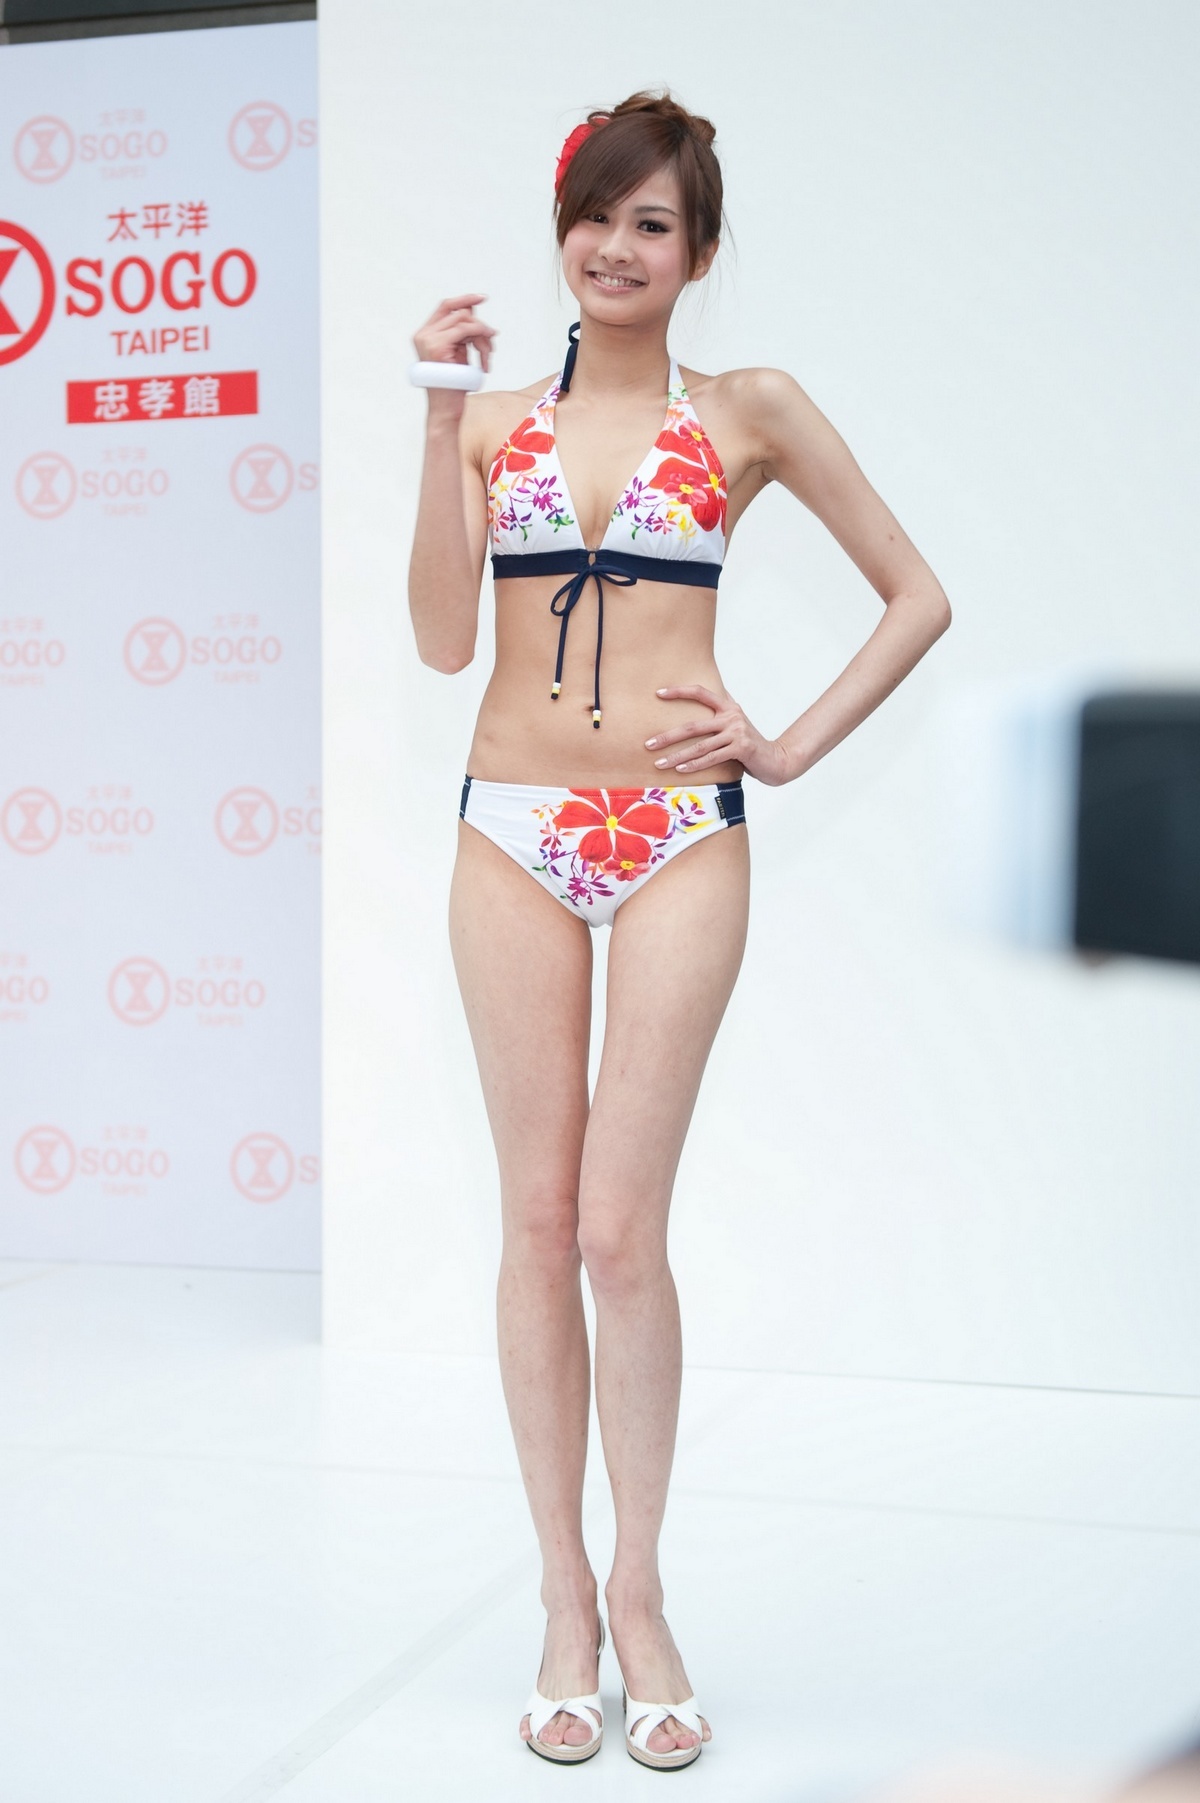 Sogo swimsuit show Yilin Chen Kaijun Wu Yilin sexy domestic beauty